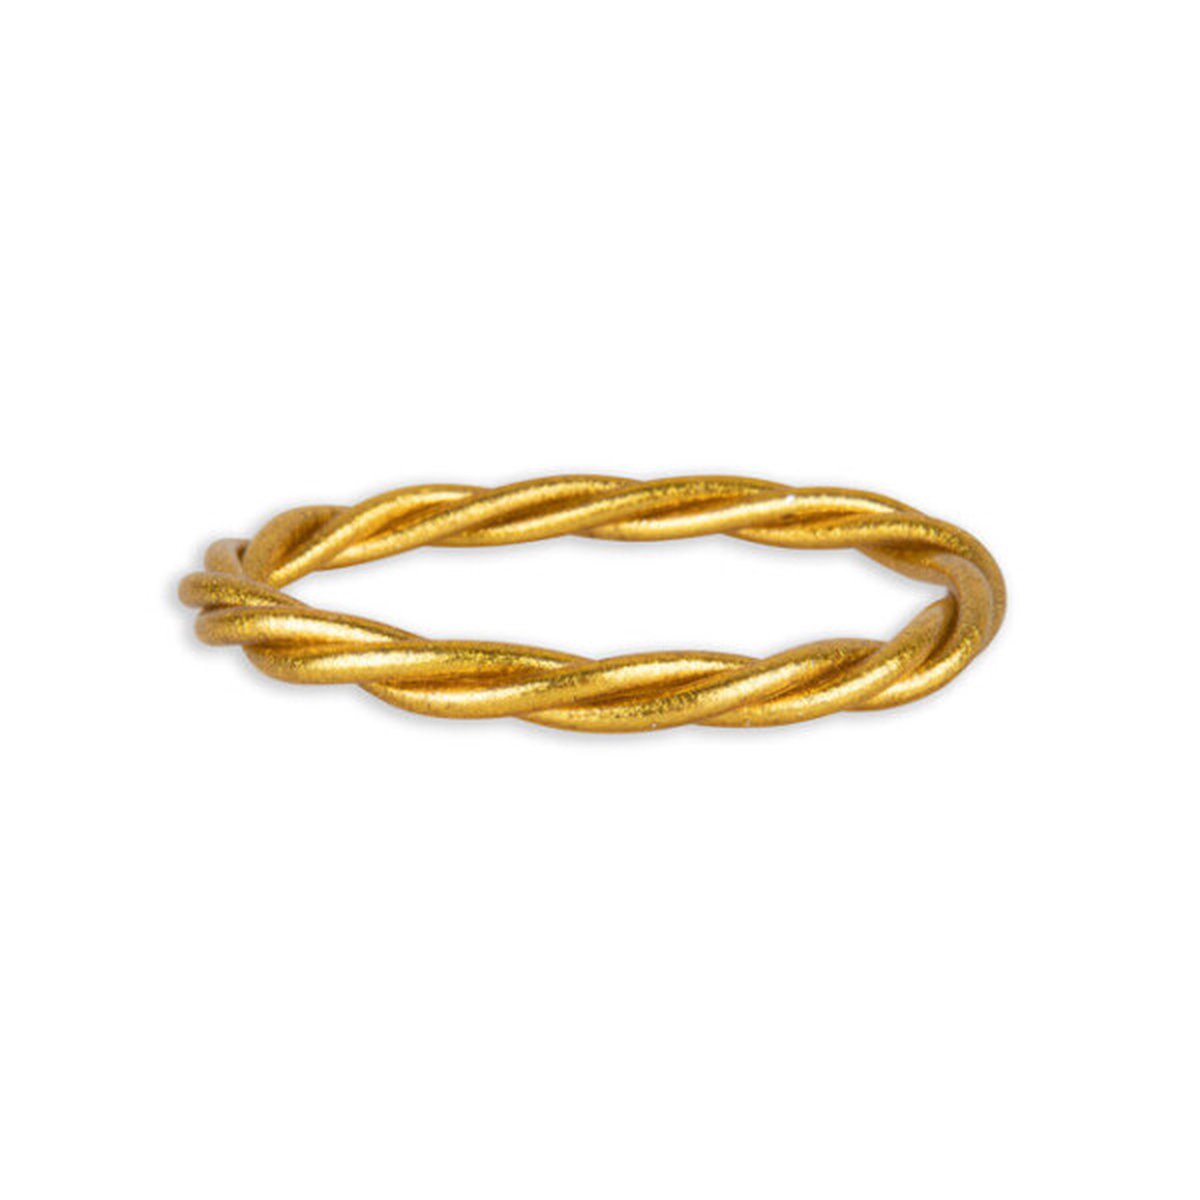 HINTH Lucky Bracelet, Twisted, Light Gold, Size S, Mantra Armband, Buddha Armband